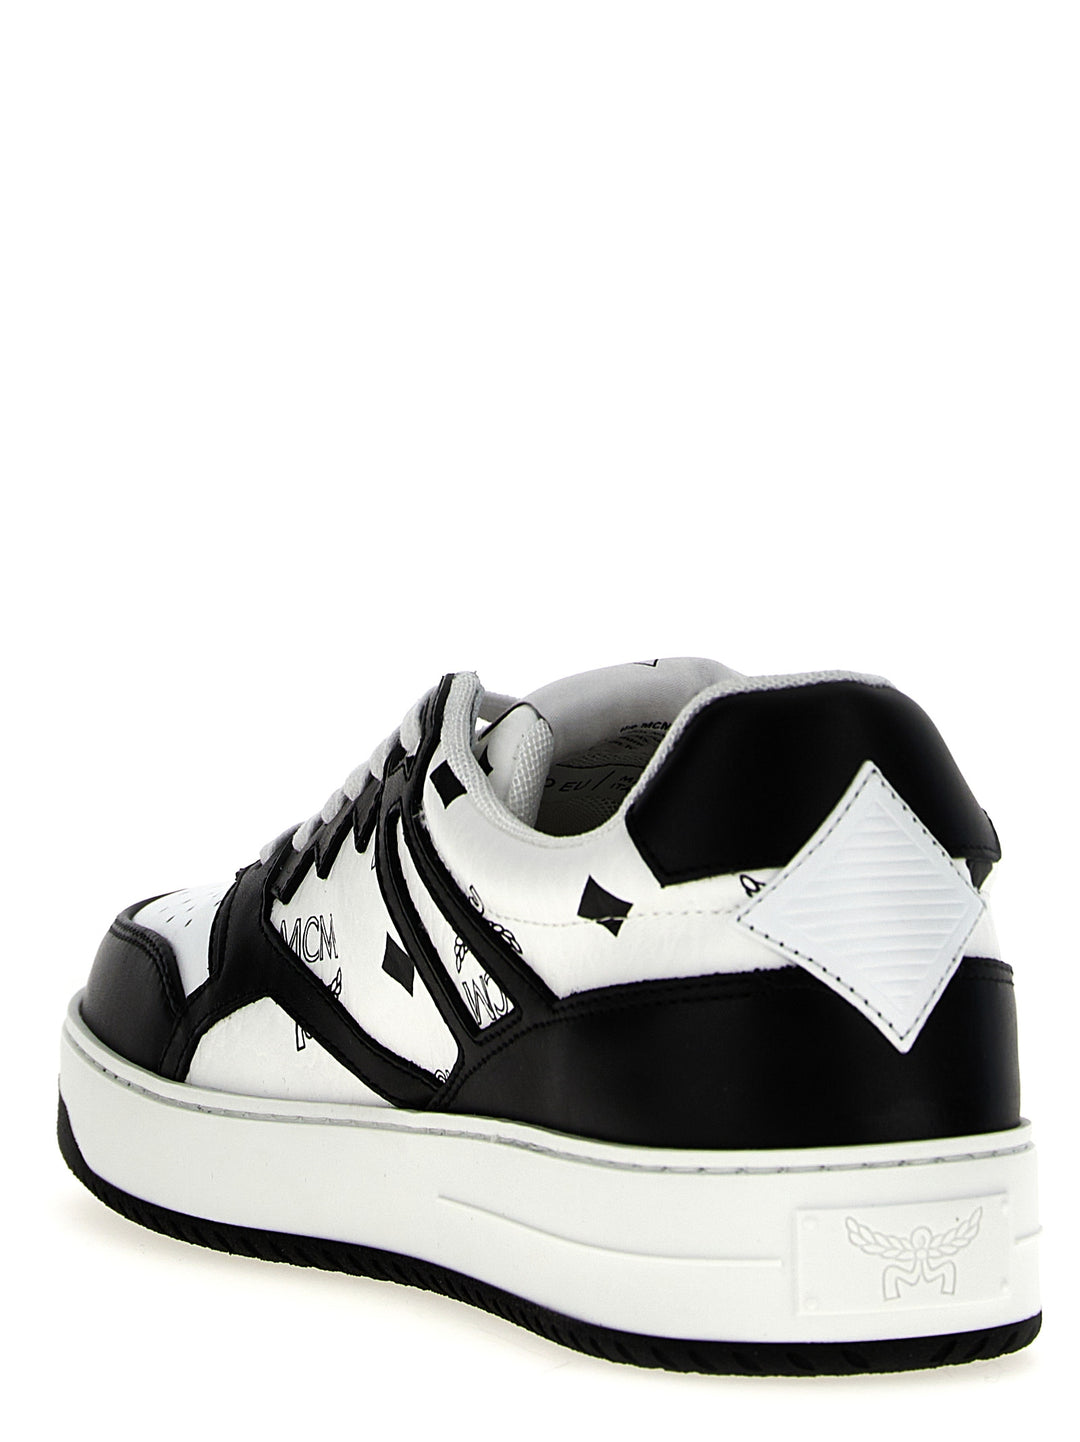 Neo Terrain Sneakers Bianco/Nero